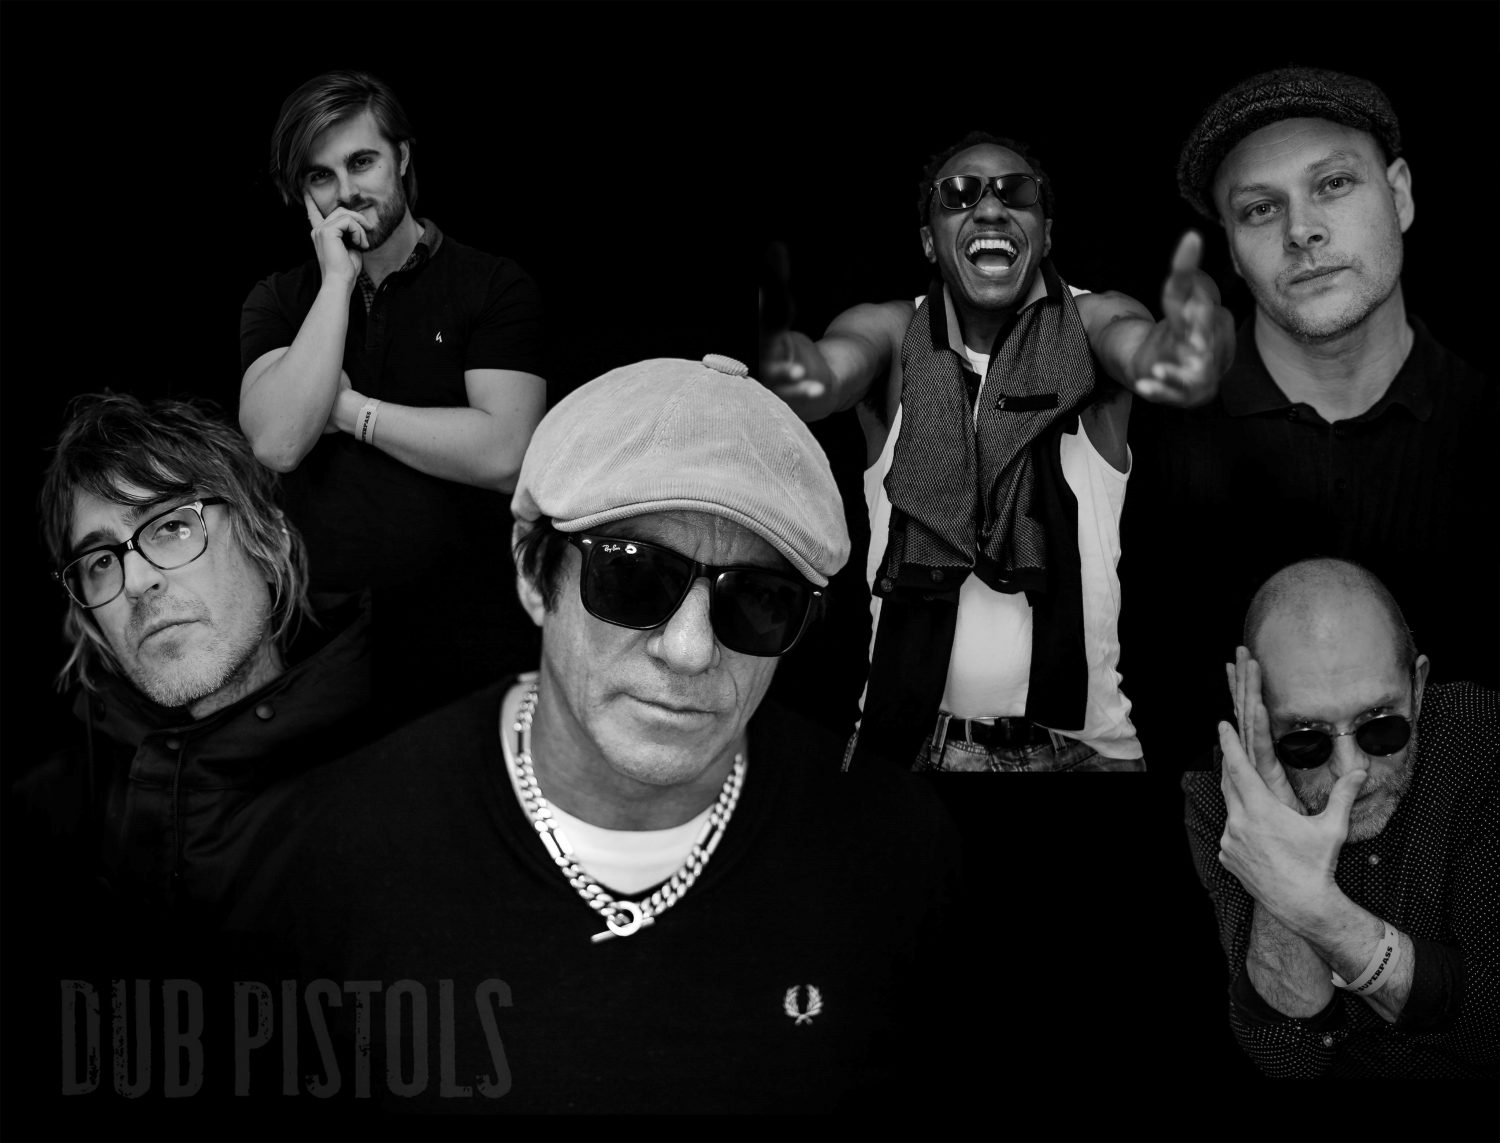 The Dub Pistols